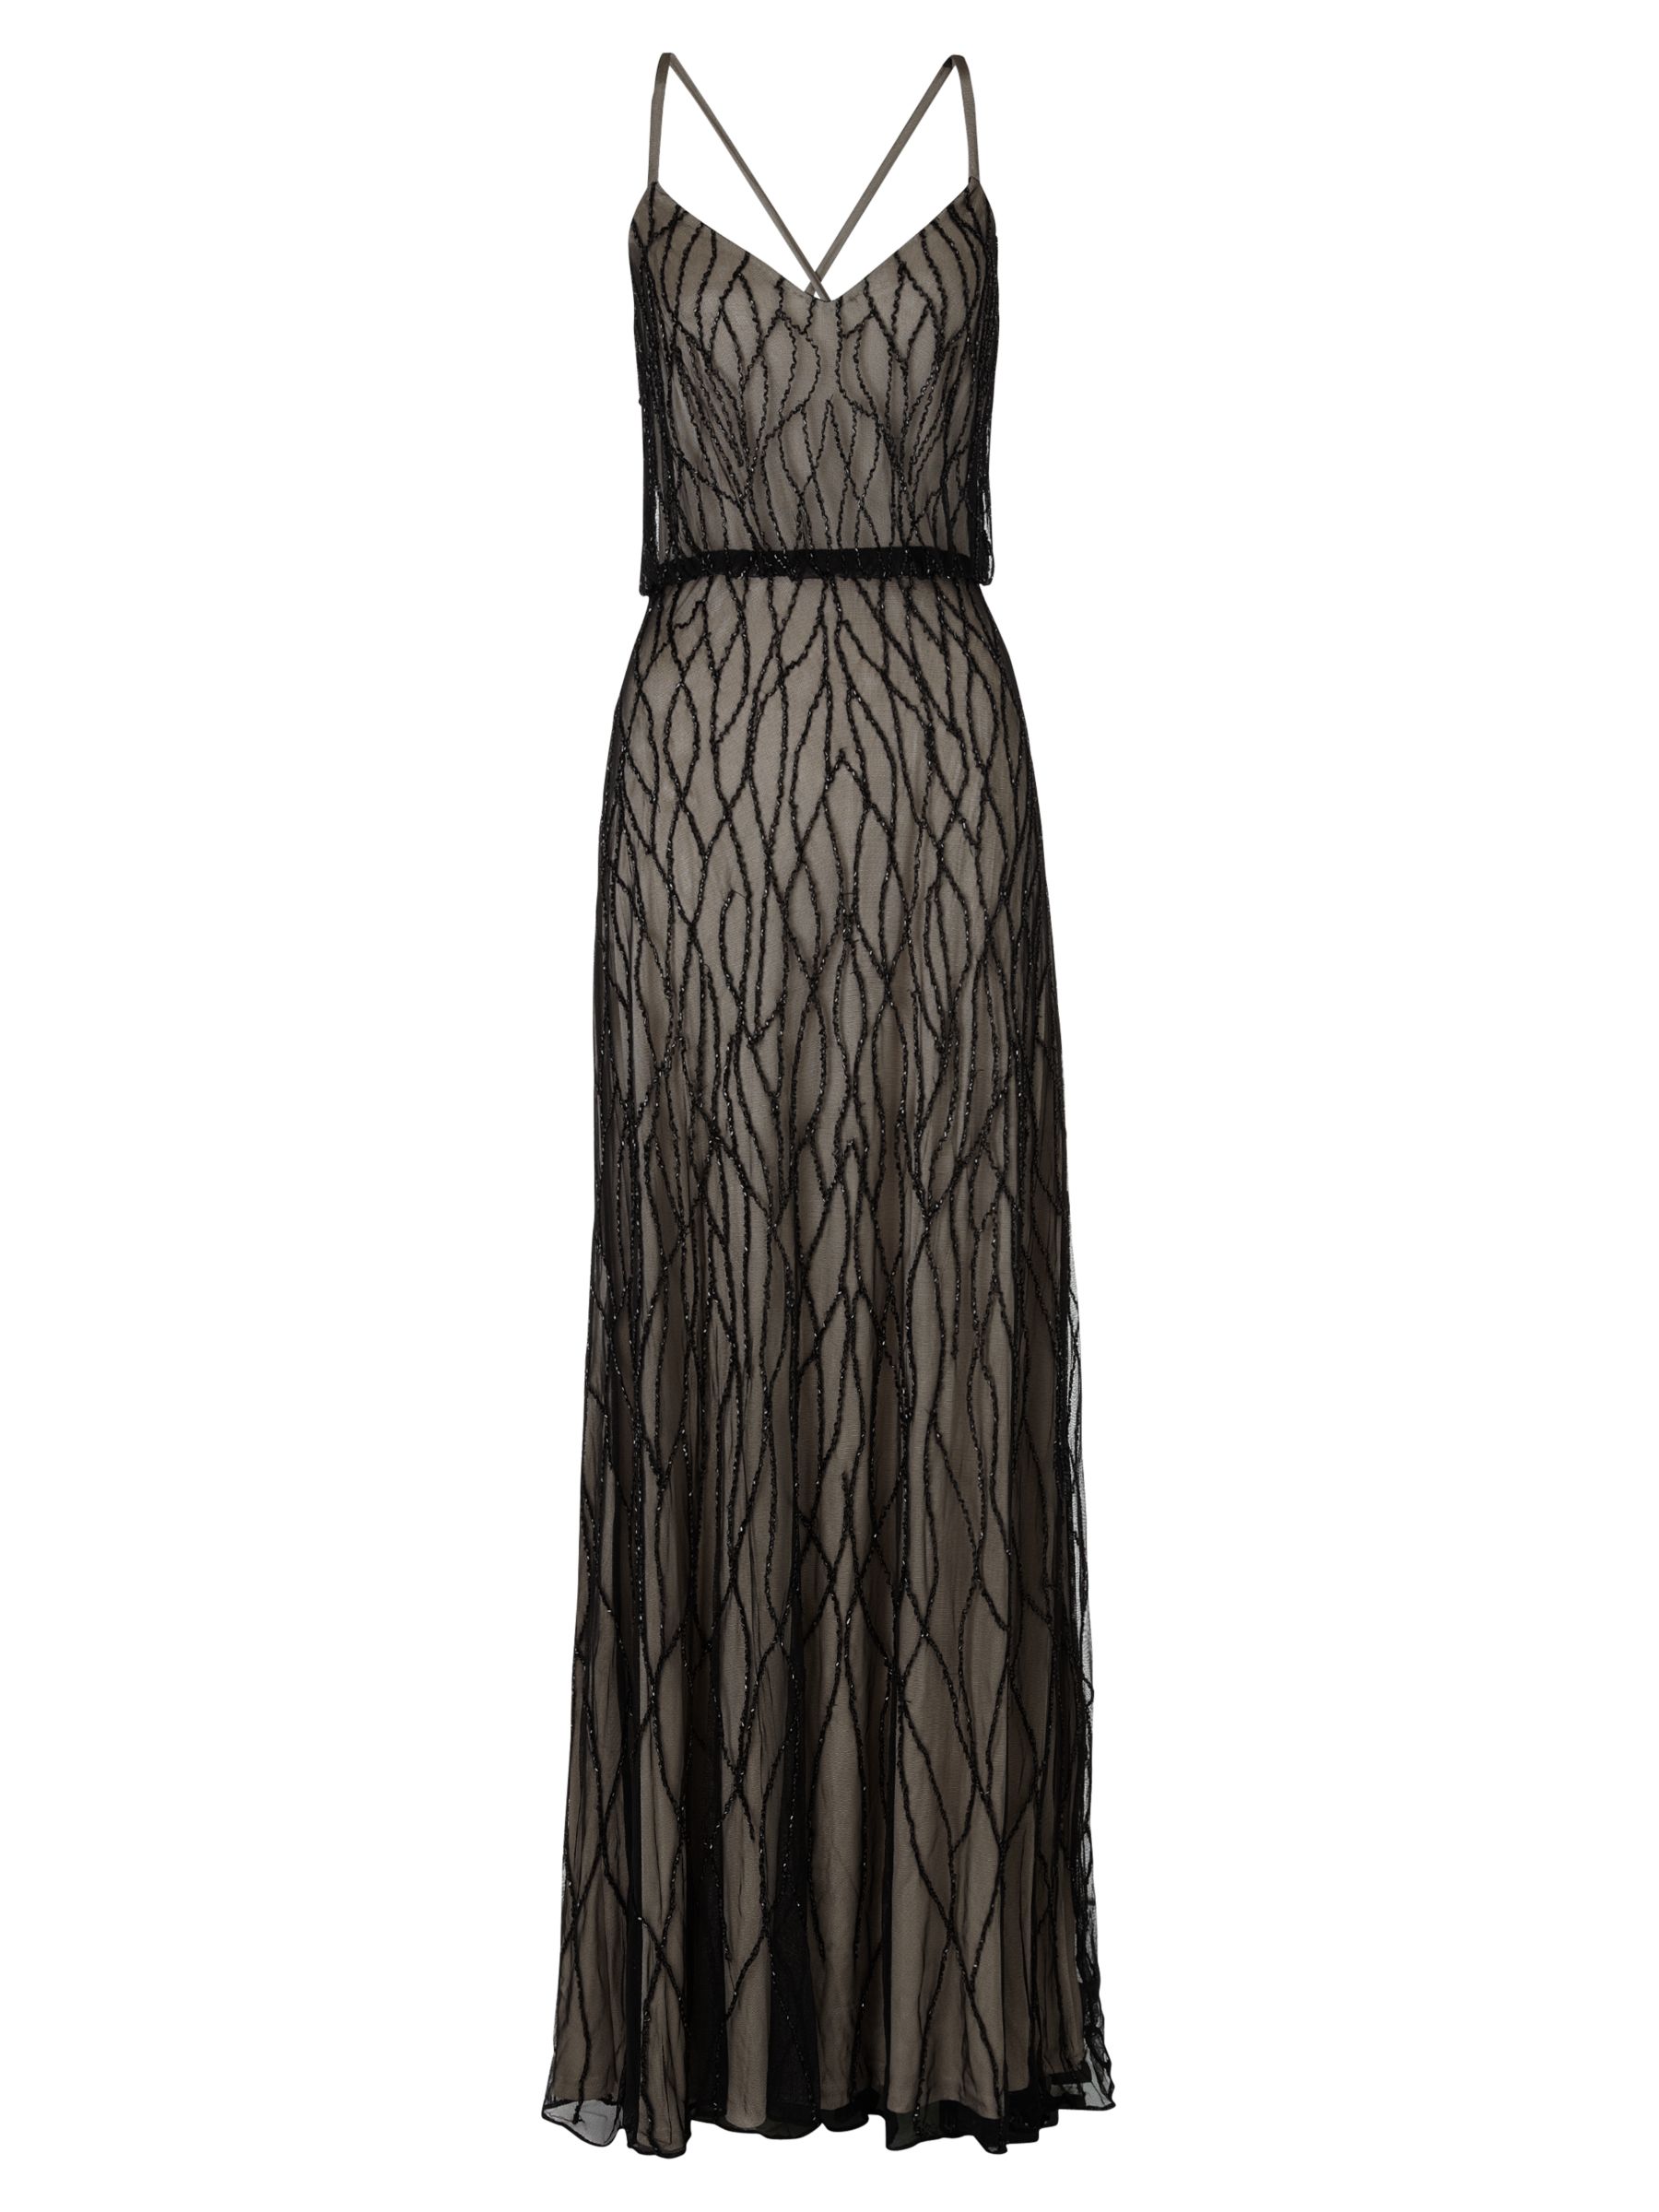 Adrianna Papell Long Halter Blouson Dress, Black/Nude